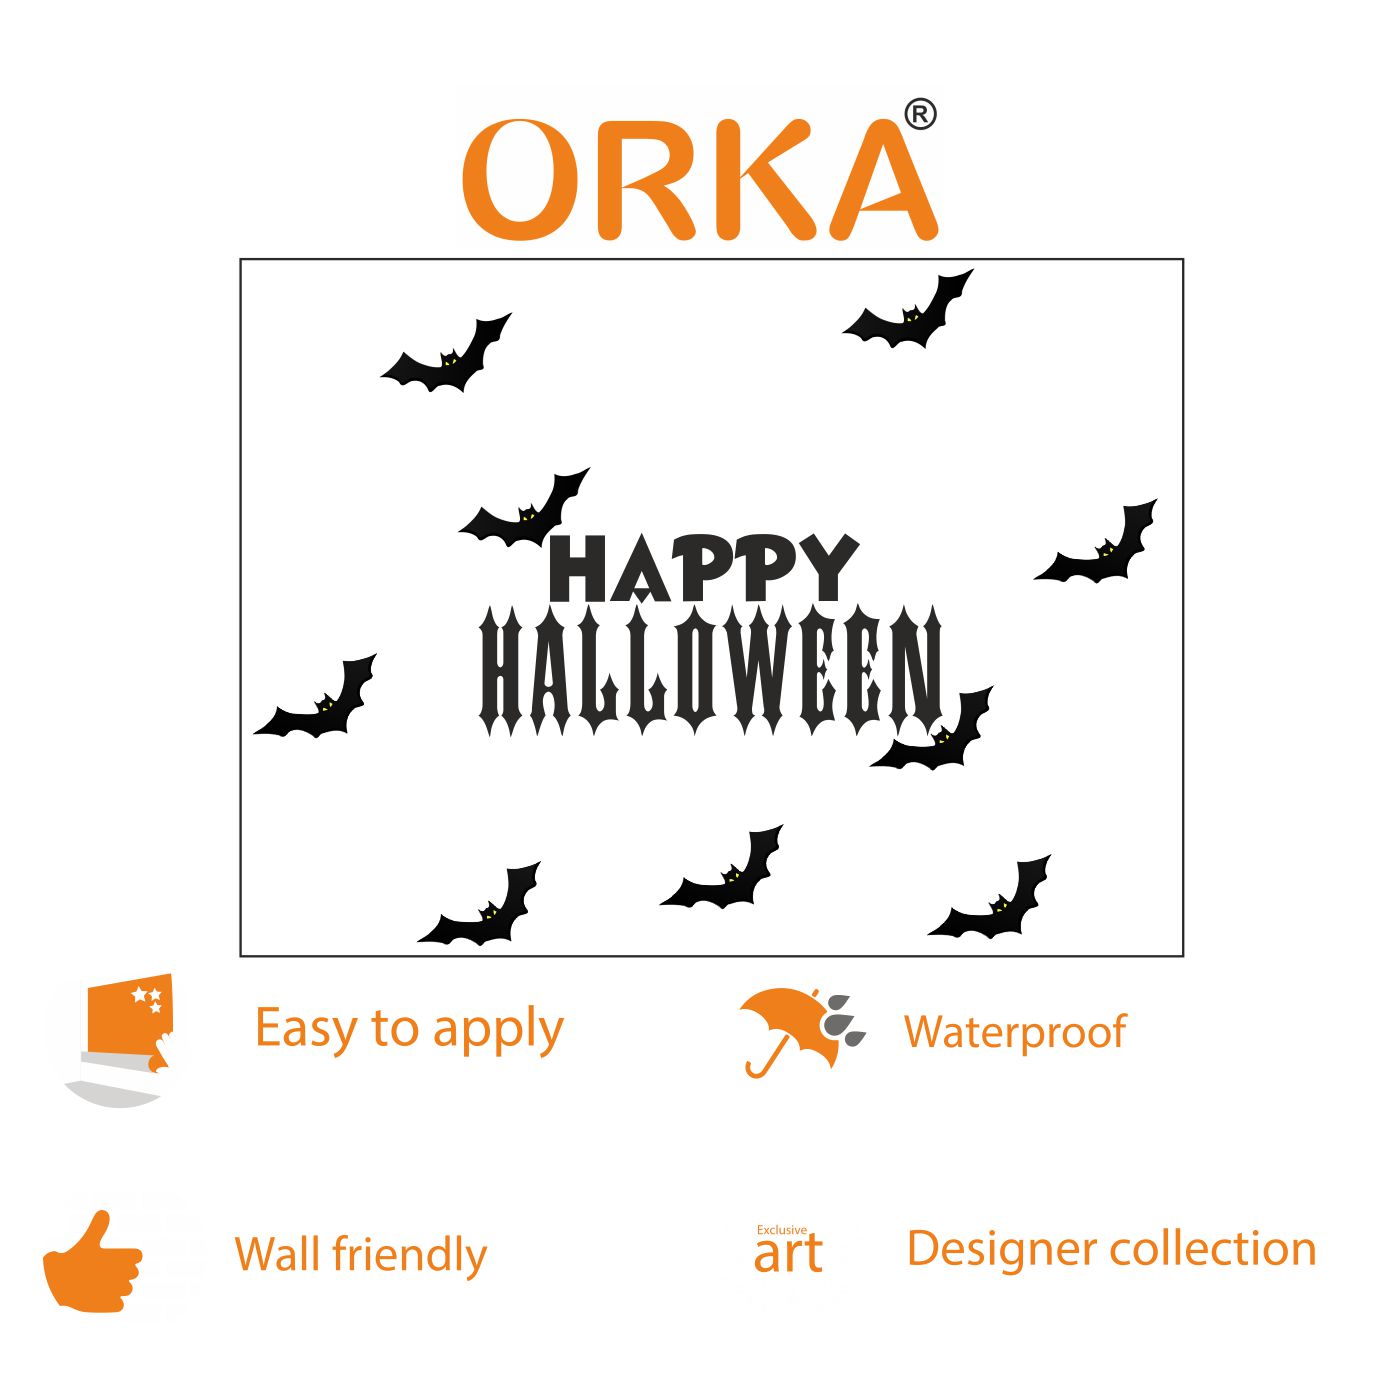 ORKA Halloween Wall Decal Sticker 15  